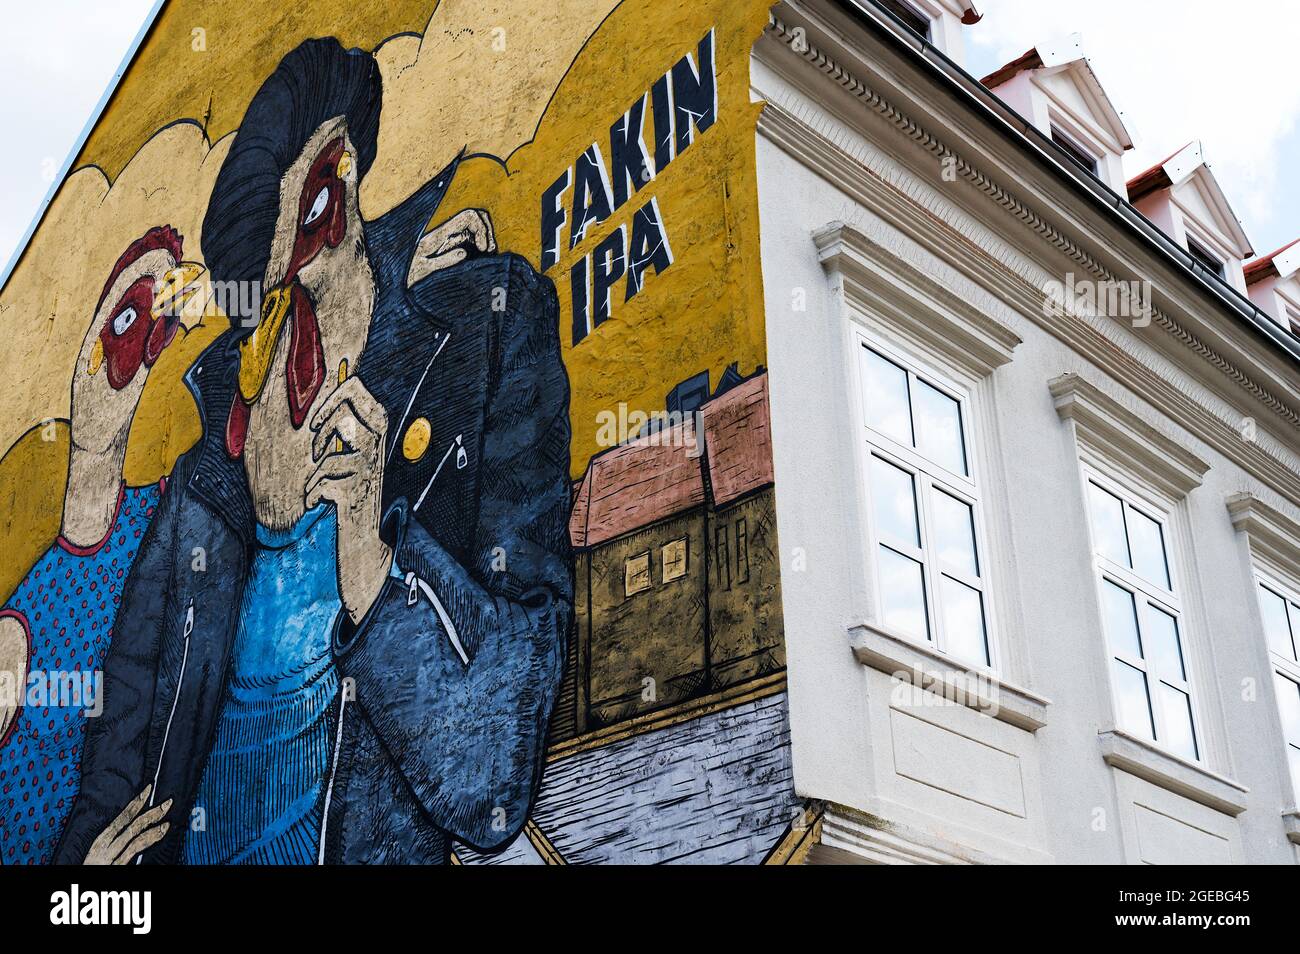 Groovy street art mural above a bar in Zagreb, Croatia Stock Photo